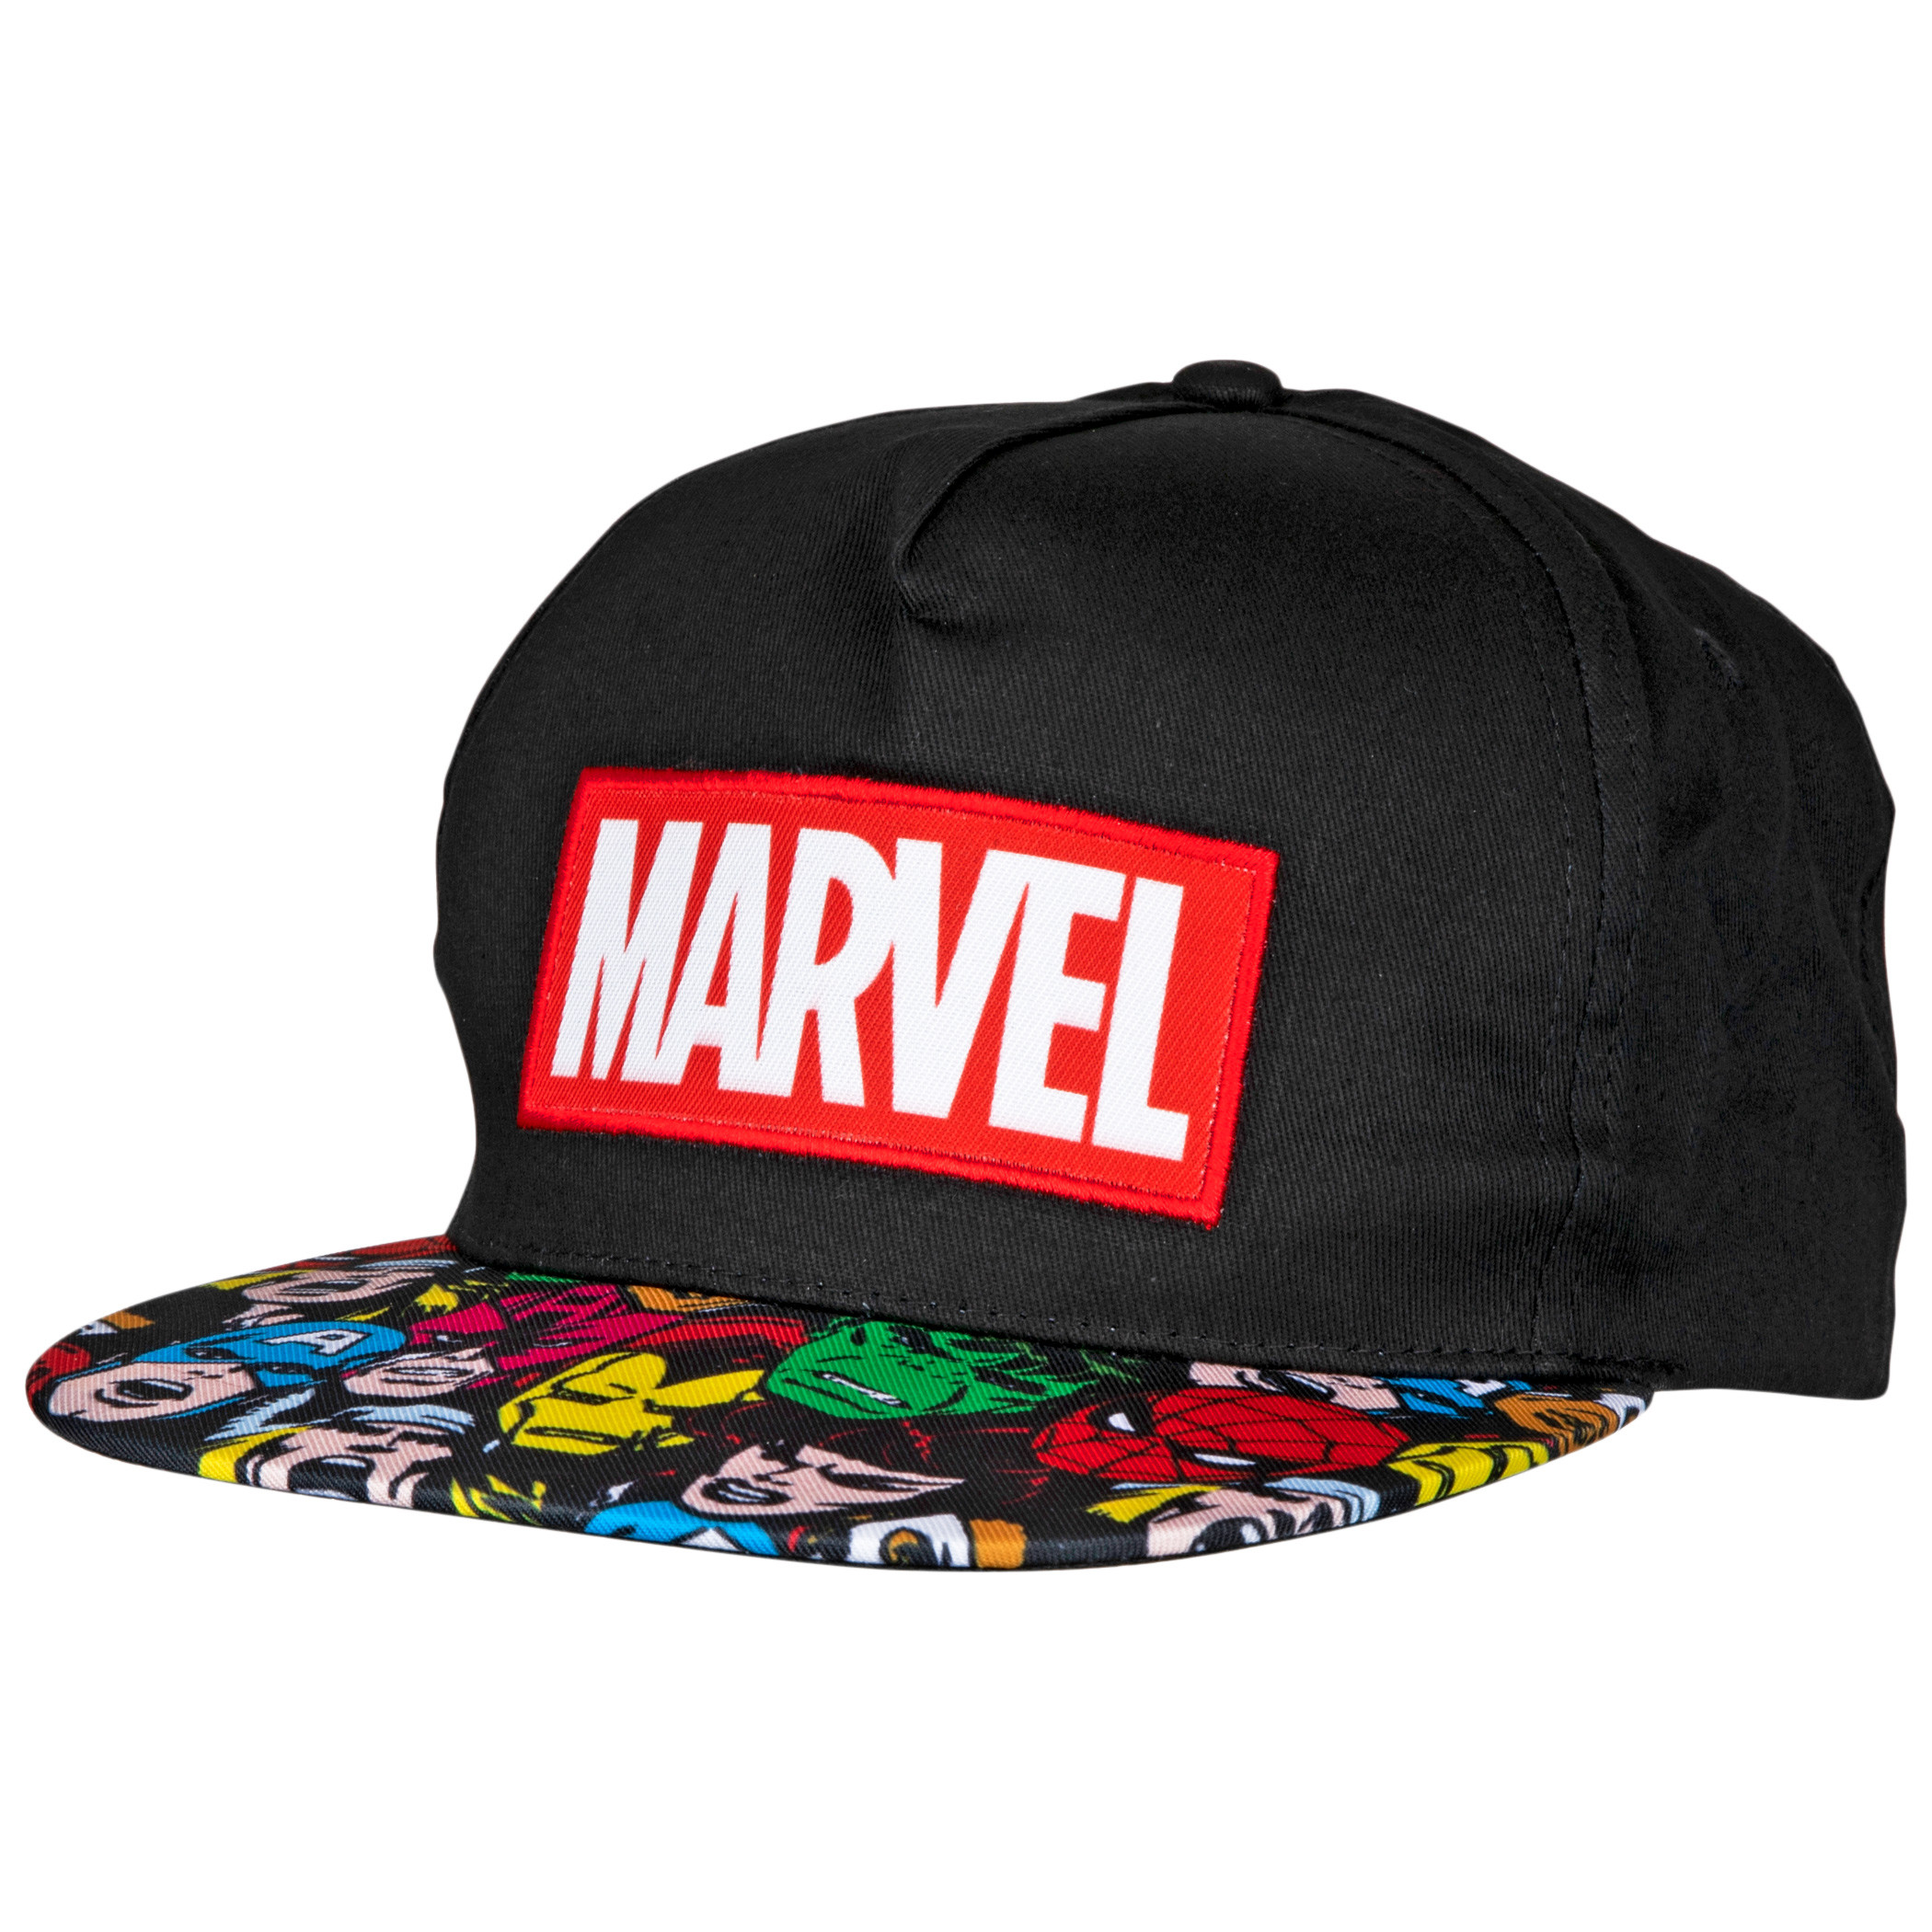 Marvel Comics Brand Logo With Sublimated Brim Adjustable Snapback Hat